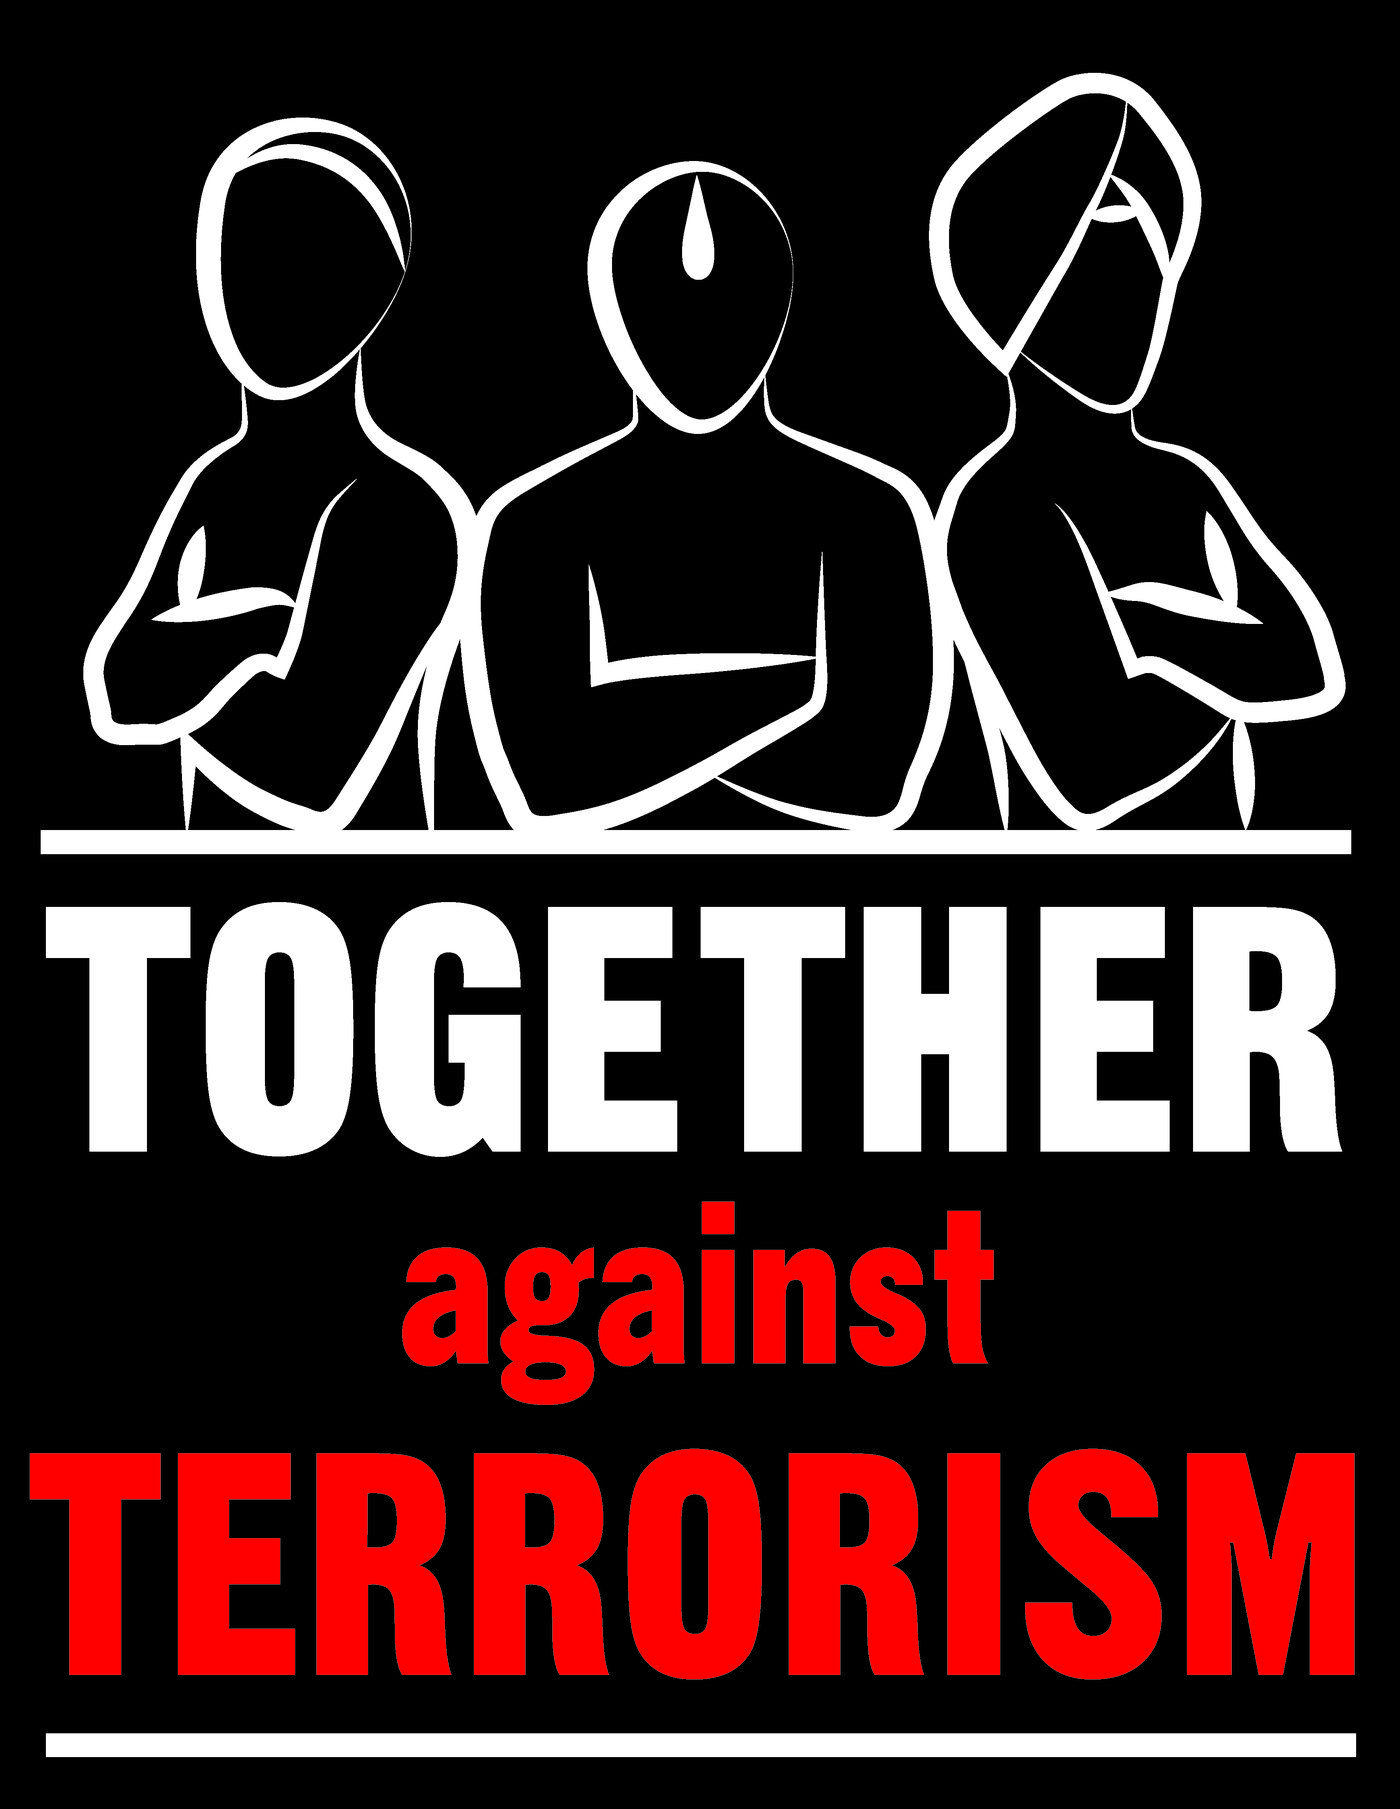 Terrorism Logo - Together against terrorism logo by Amritpal Singh at Coroflot.com